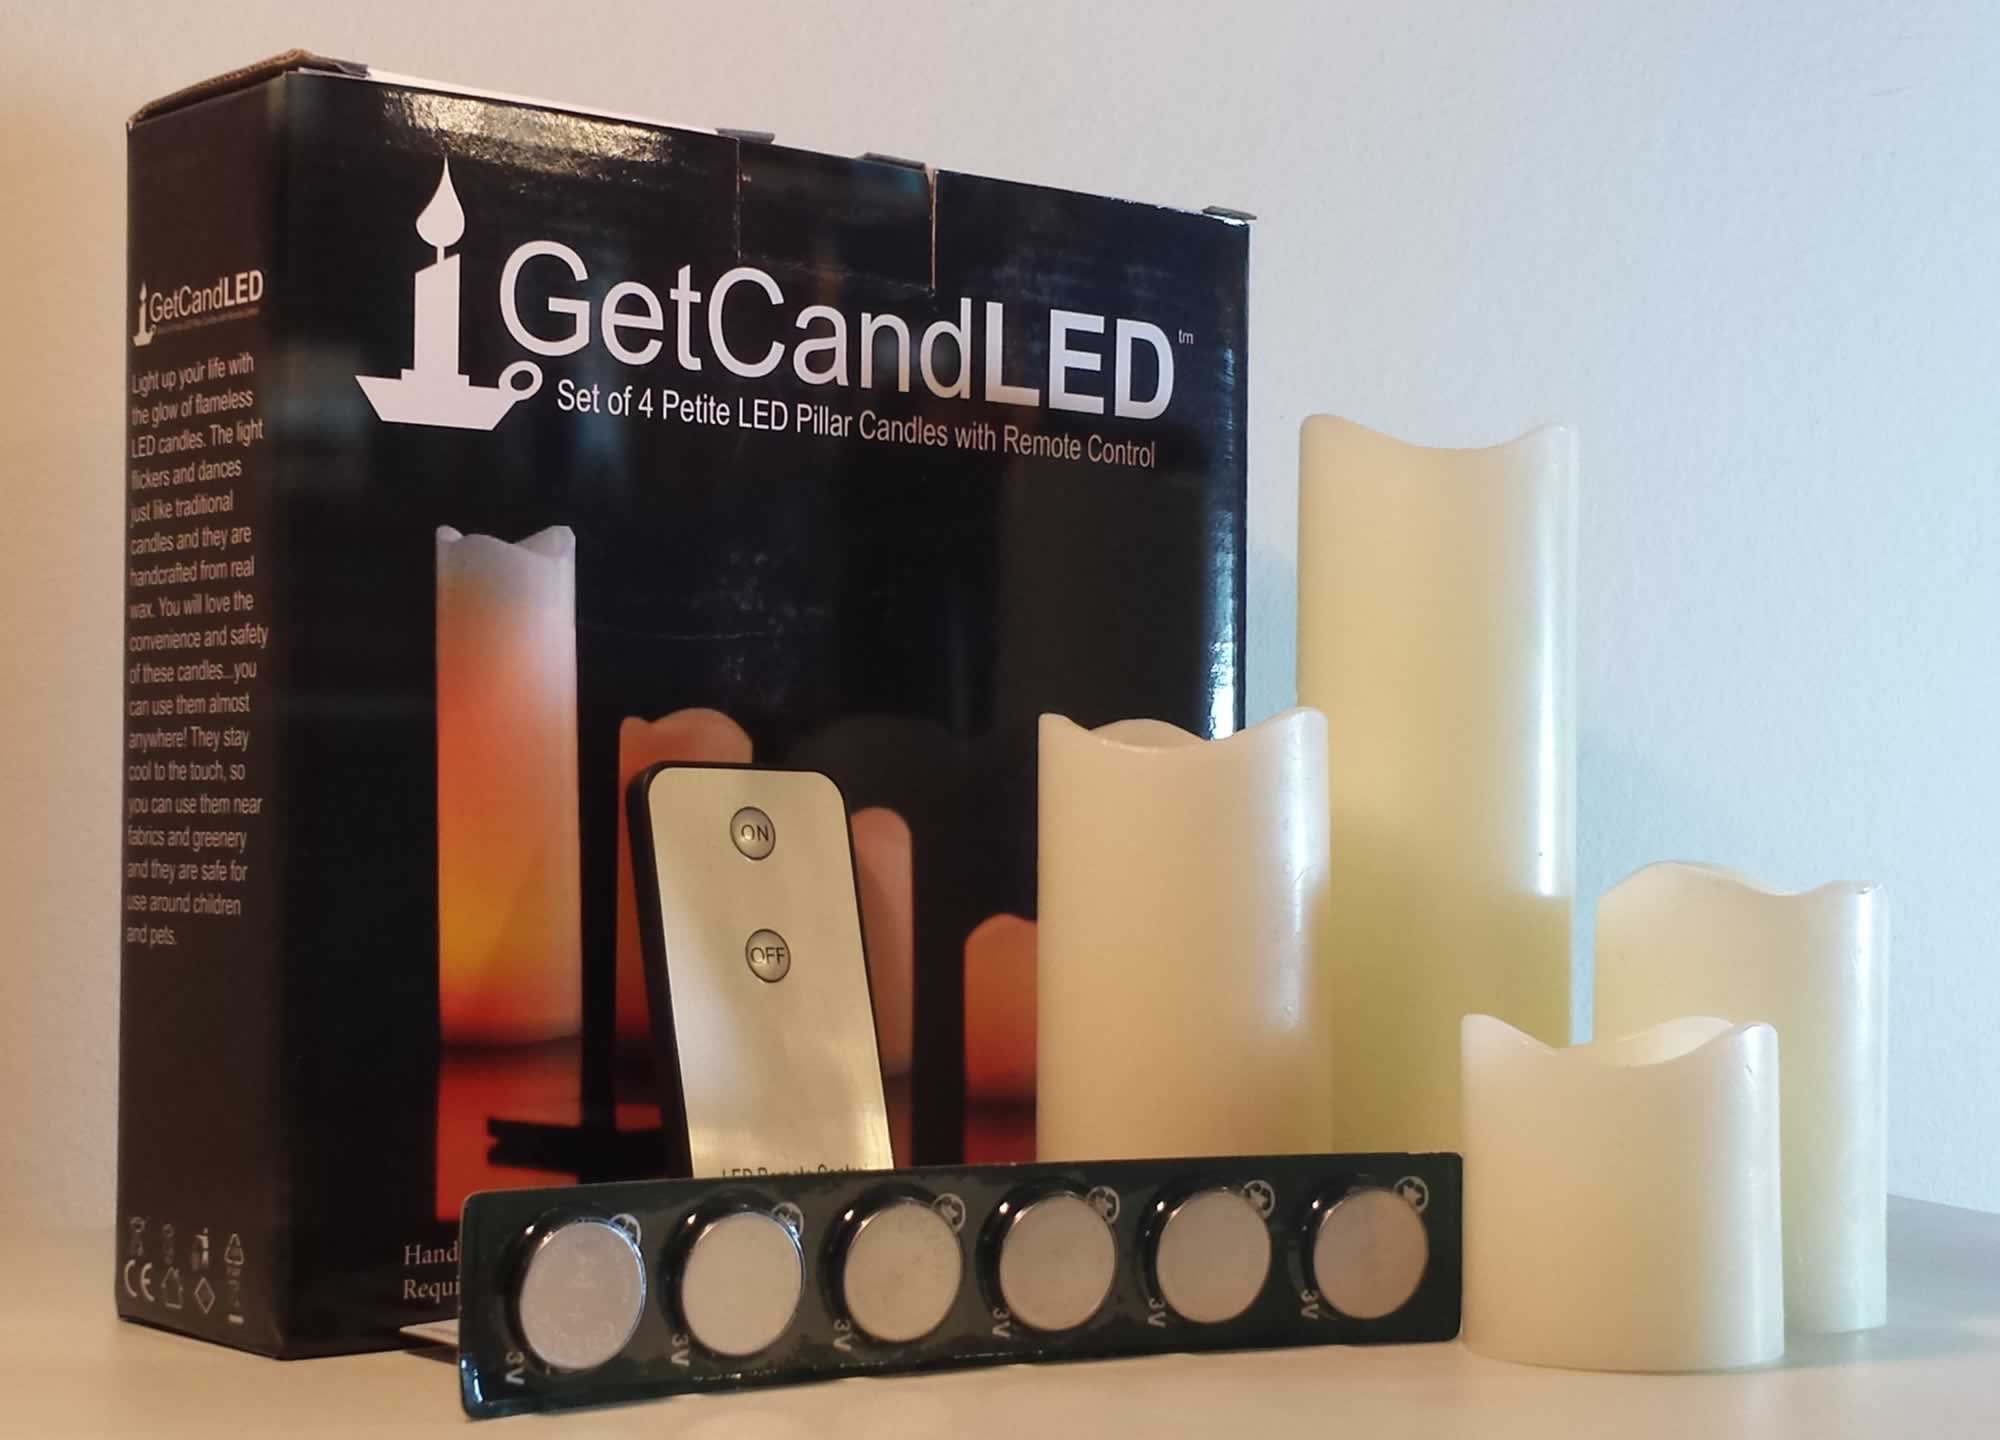 Buy GetCandLED Flameless Candle Set at Amazon.com